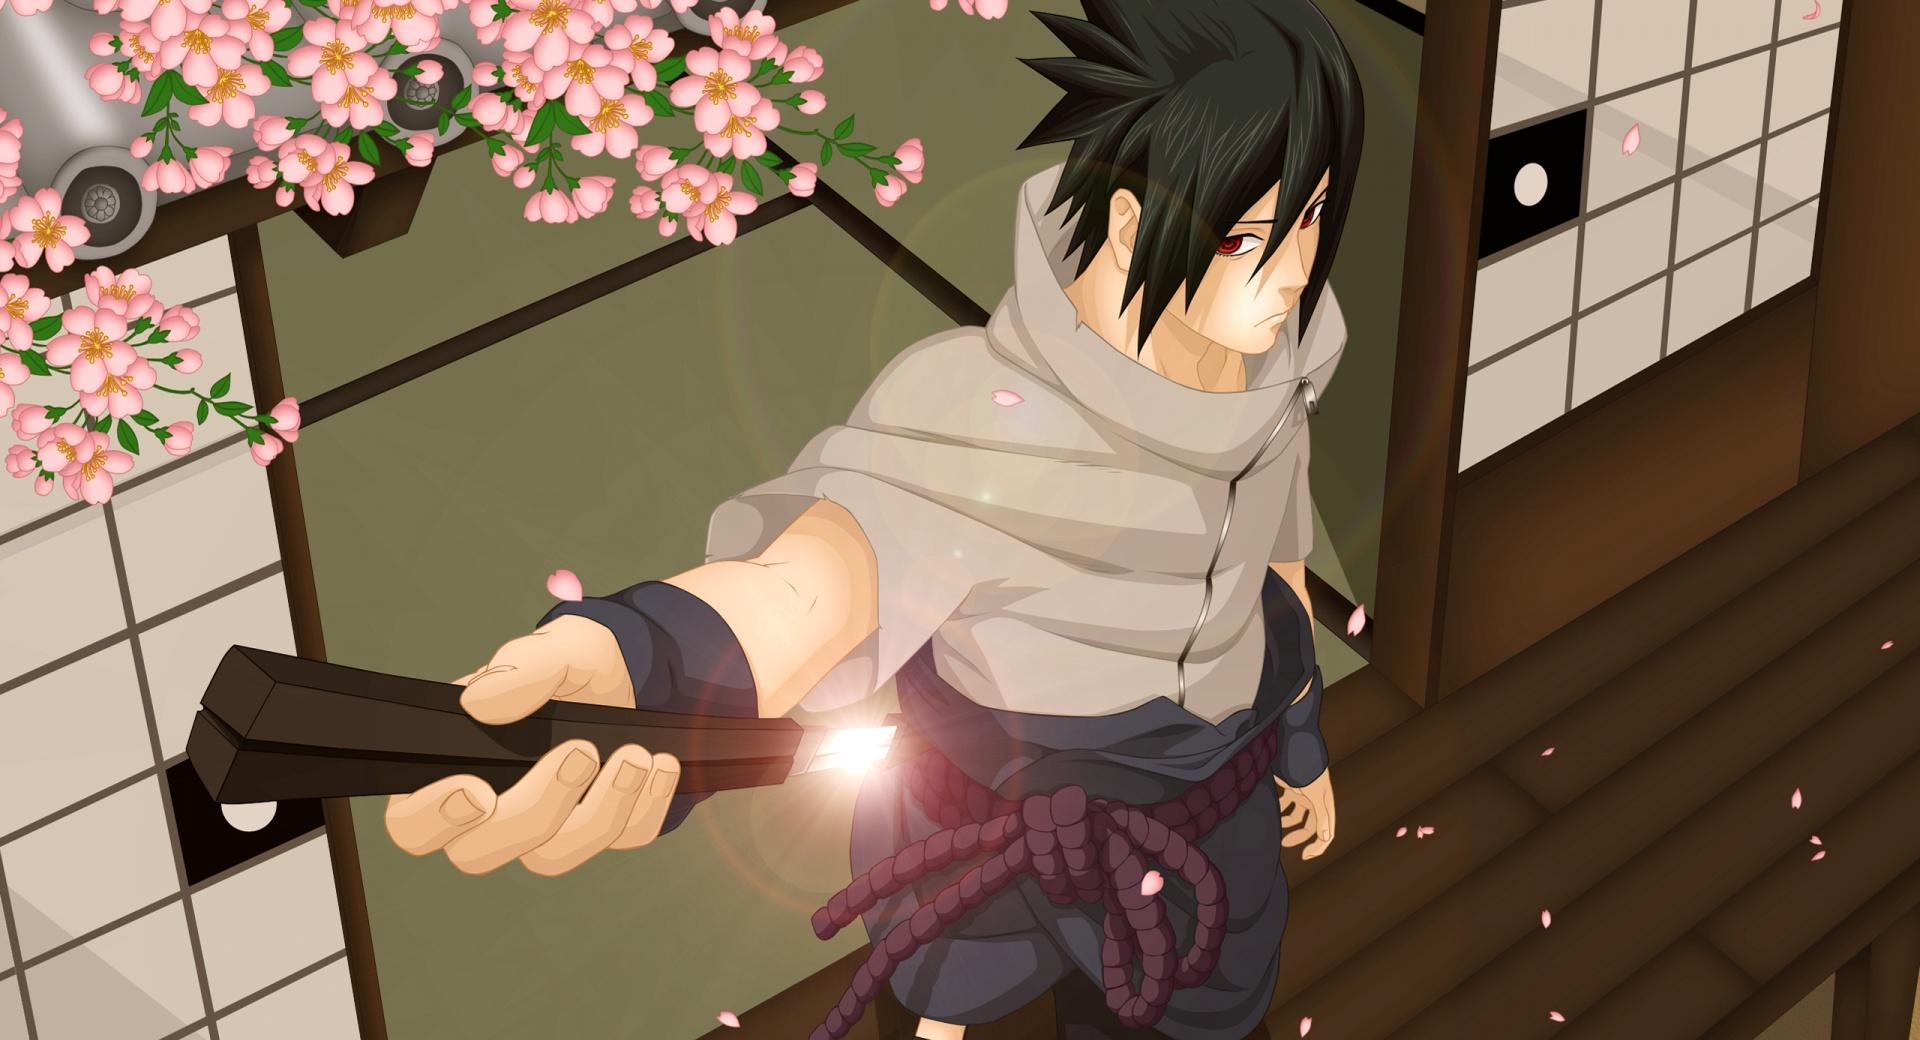 Naruto - Sasuke Before Battle at 1280 x 960 size wallpapers HD quality